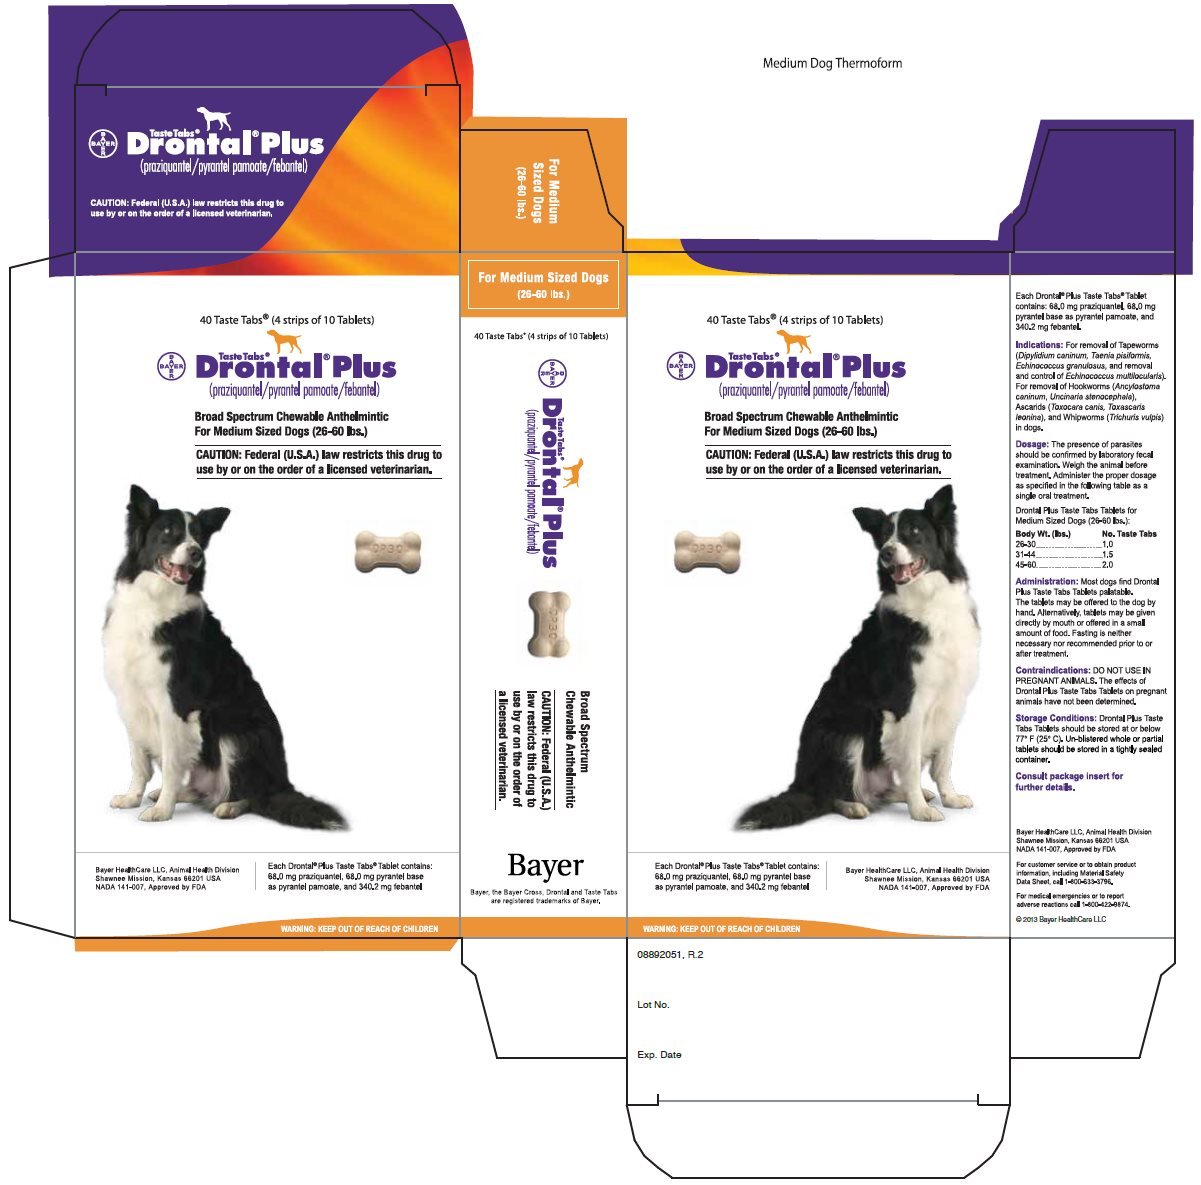 Drontal Plus Taste Tabs for Medium Sized Dogs (26-60 lbs.) label